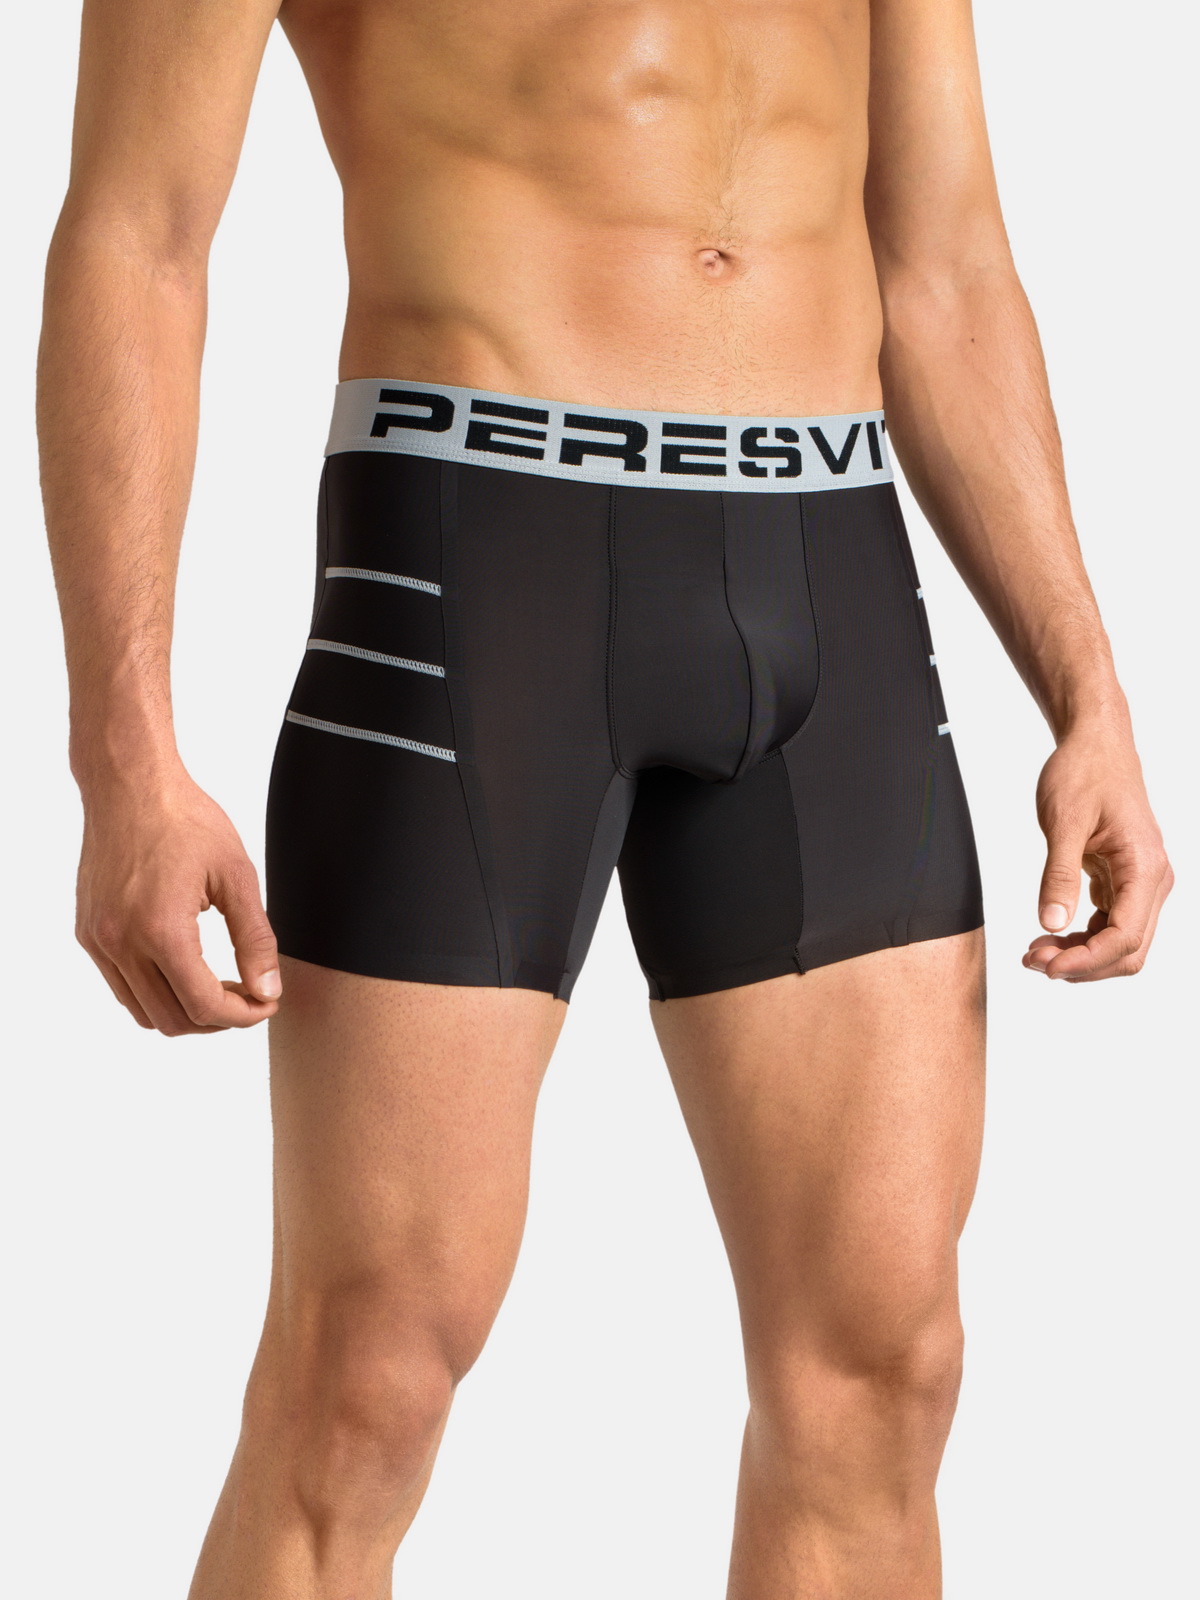 Peresvit Performance Boxer Briefs Black